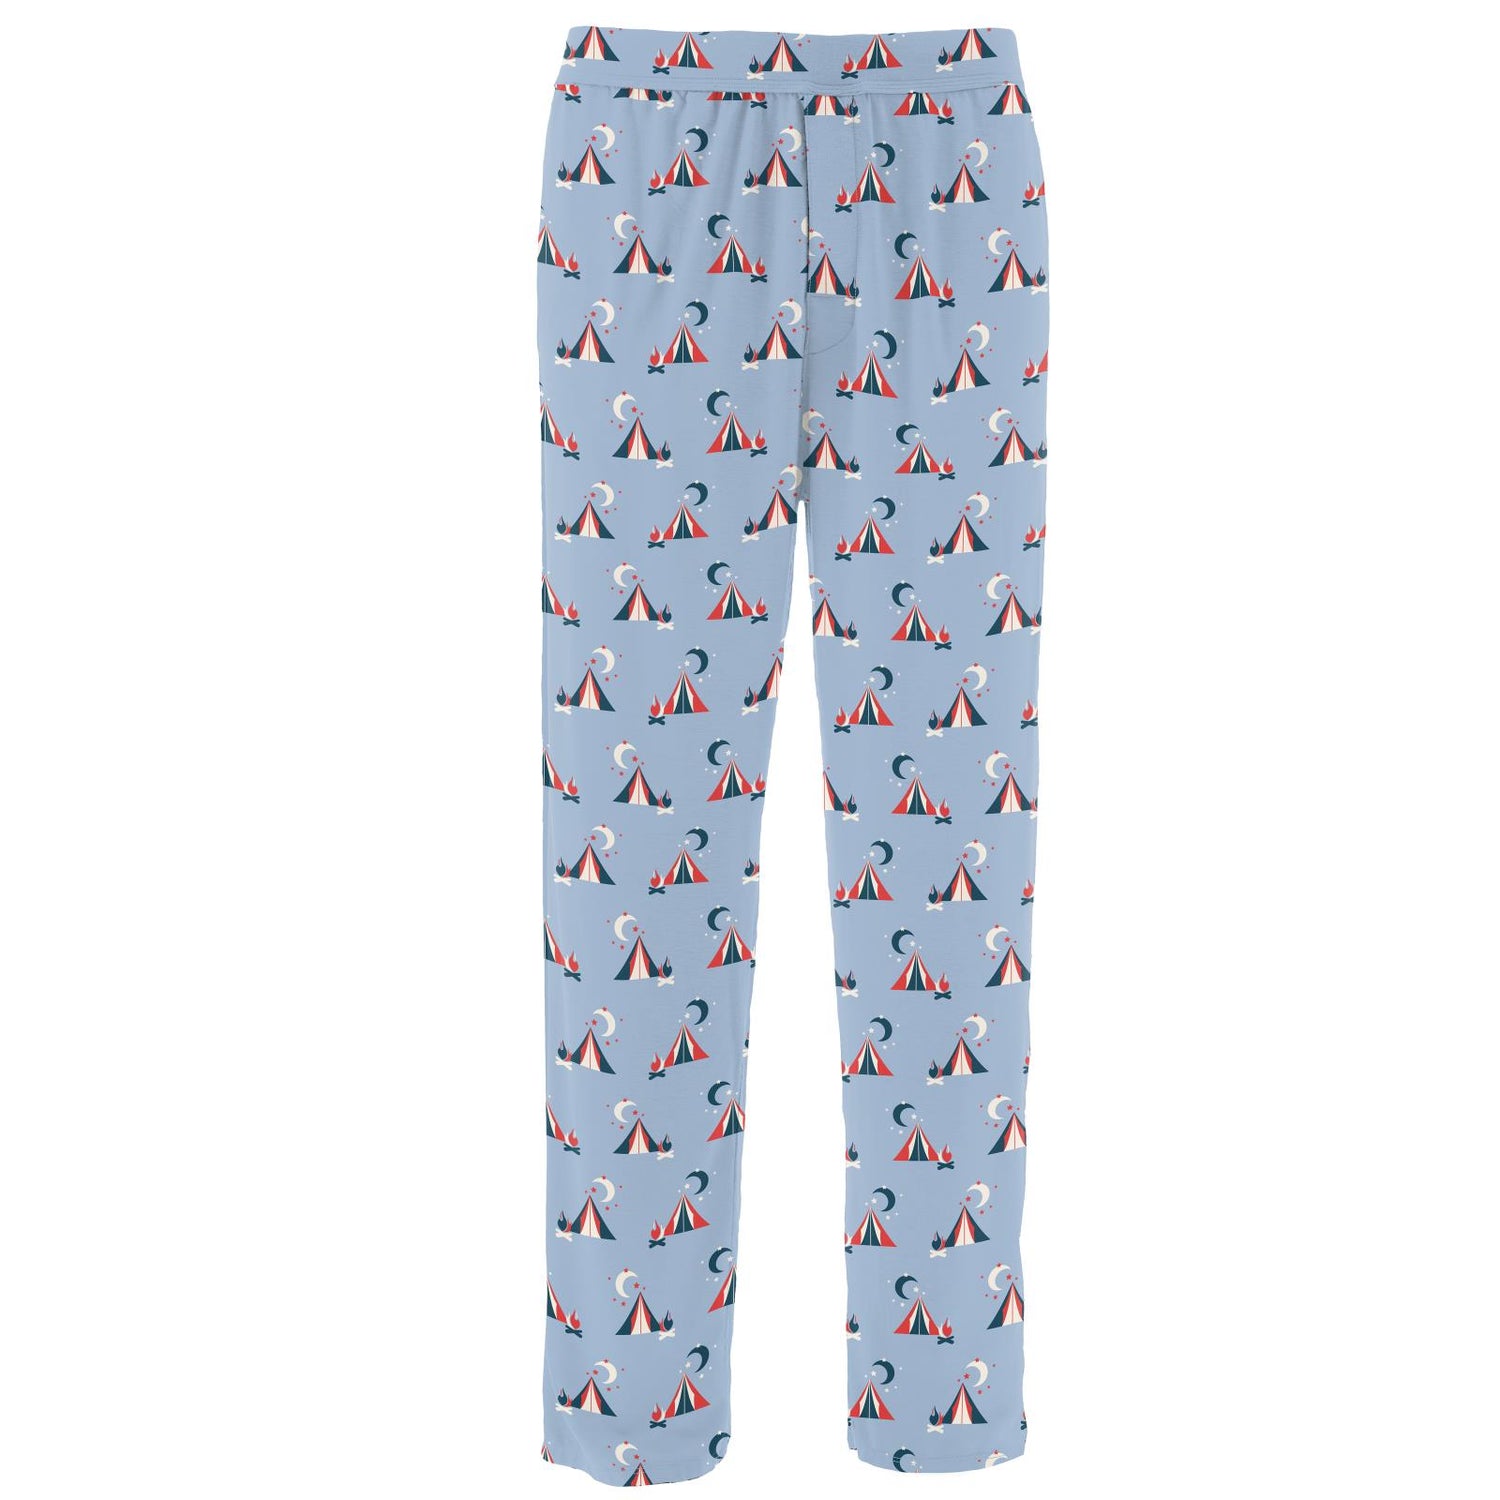 Men's Print Pajama Pants in Pond Tents